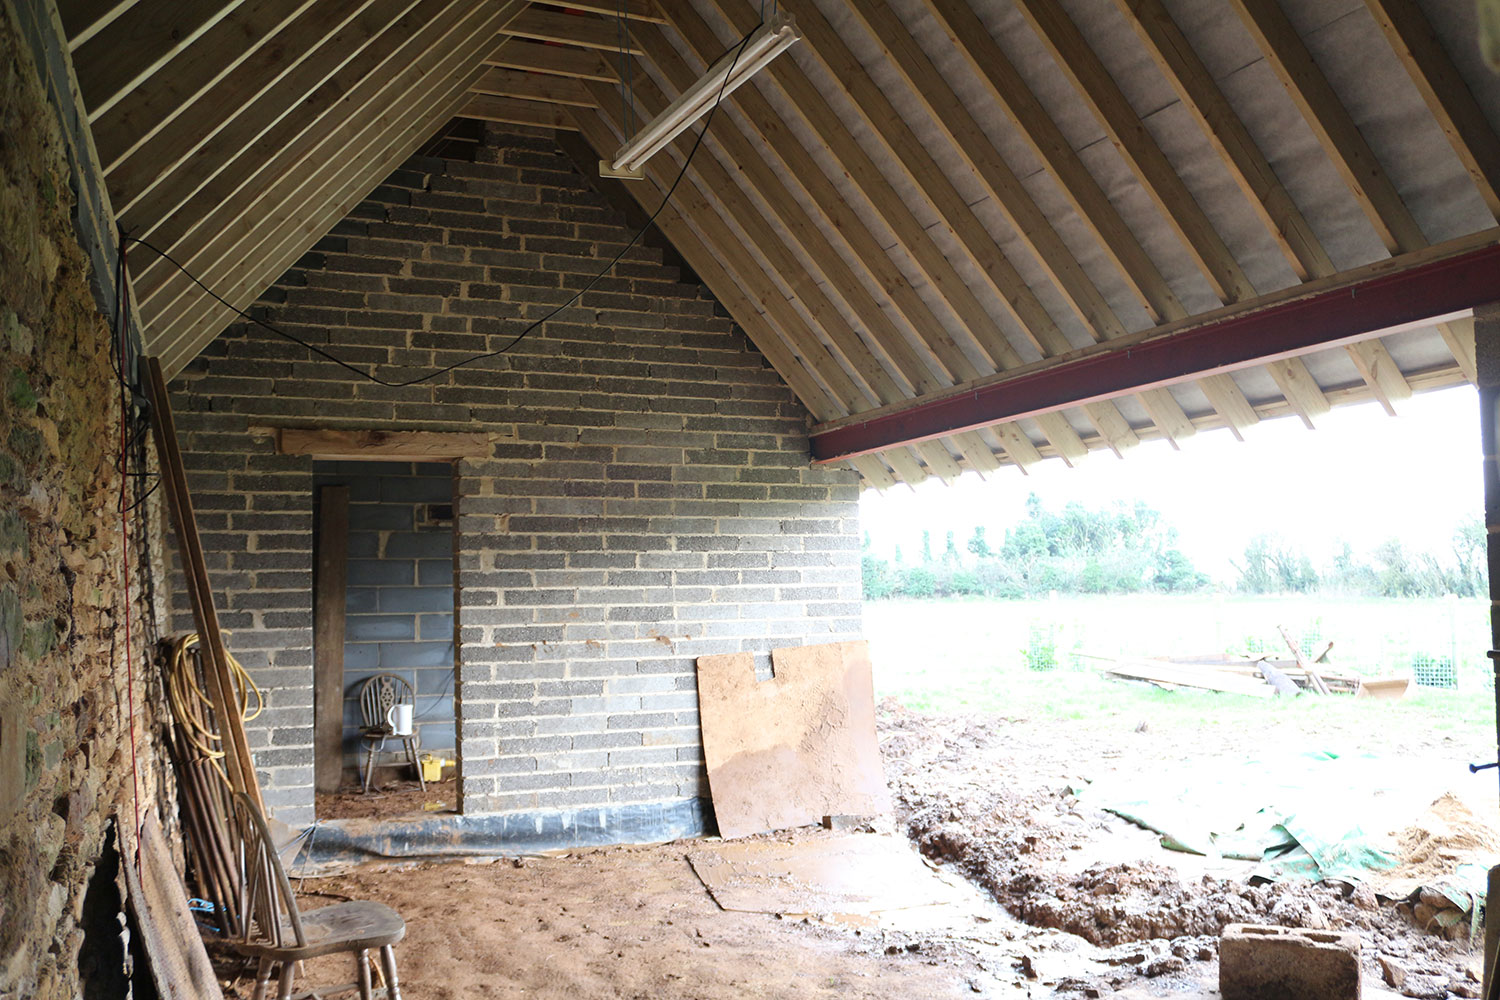 Inside of barn conversion in progress